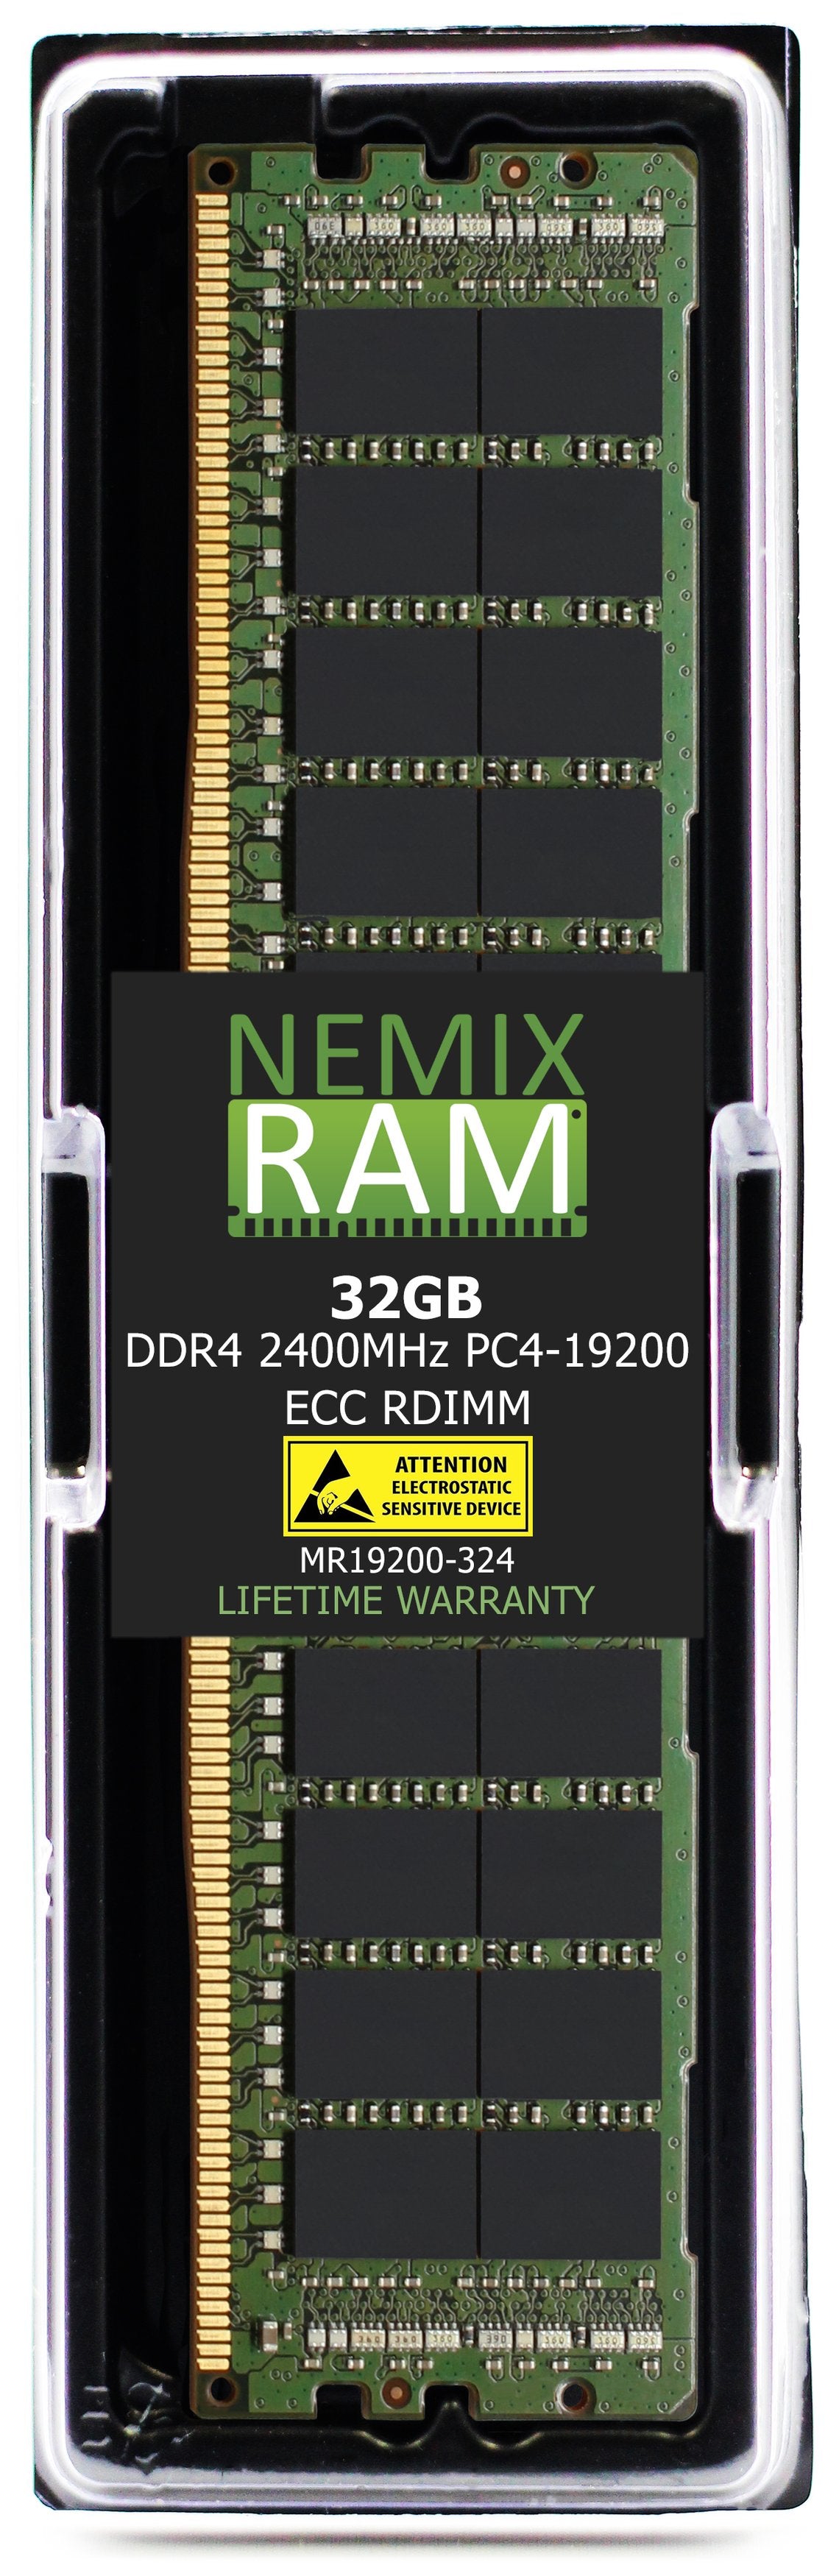 NEC Express5800 B120g-h Memory Module N8402-173F 32GB DDR4 2400MHZ PC4-19200 RDIMM